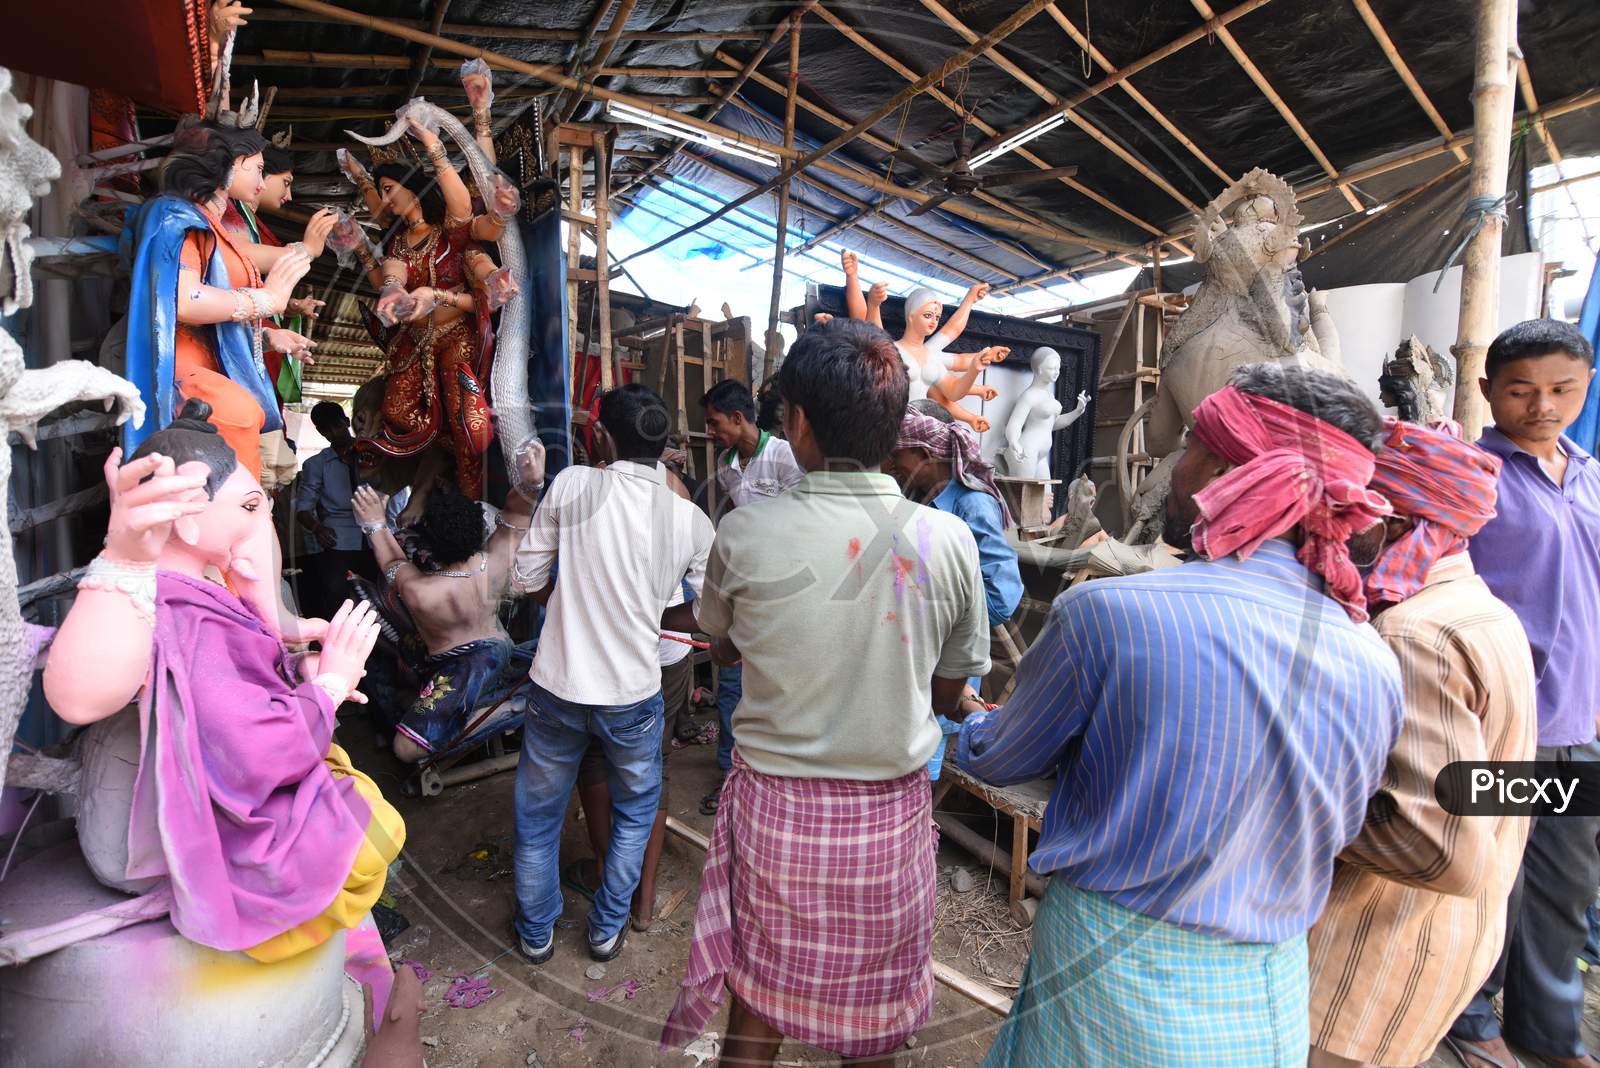 Durga Idols In Making in Workshops For Dussera or Durga Navratri Festival Celebrations in Guwahati, Assam